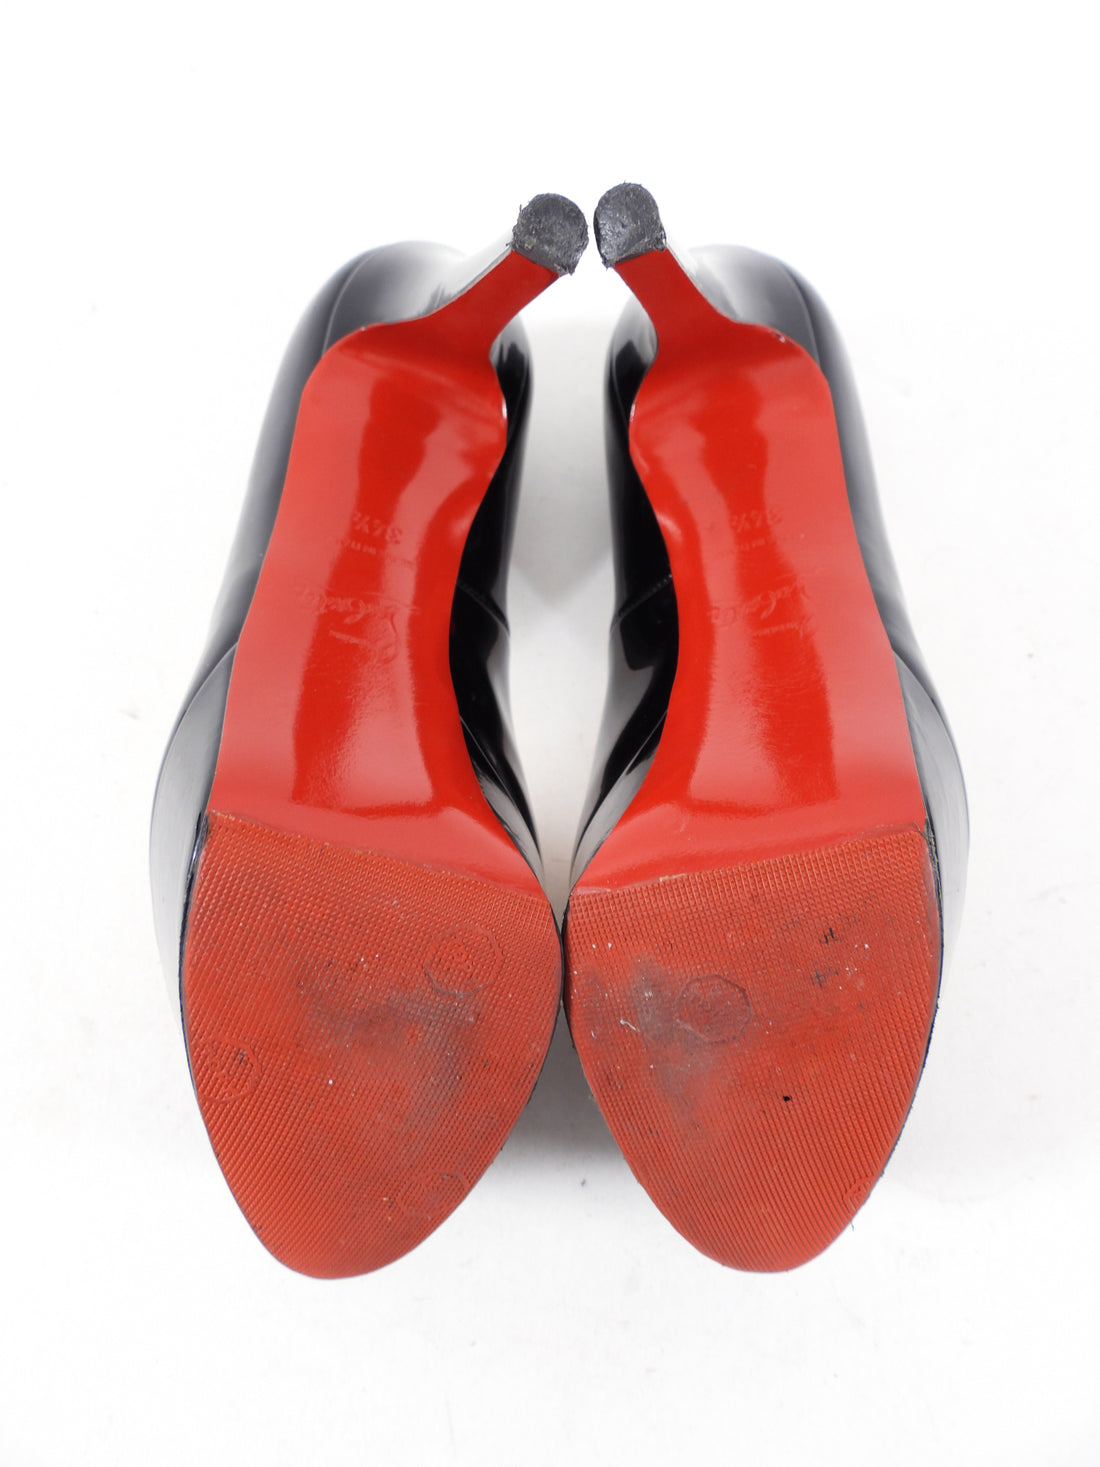 Christian Louboutin Black Patent Bianca 120 Pumps / Heels - 34.5